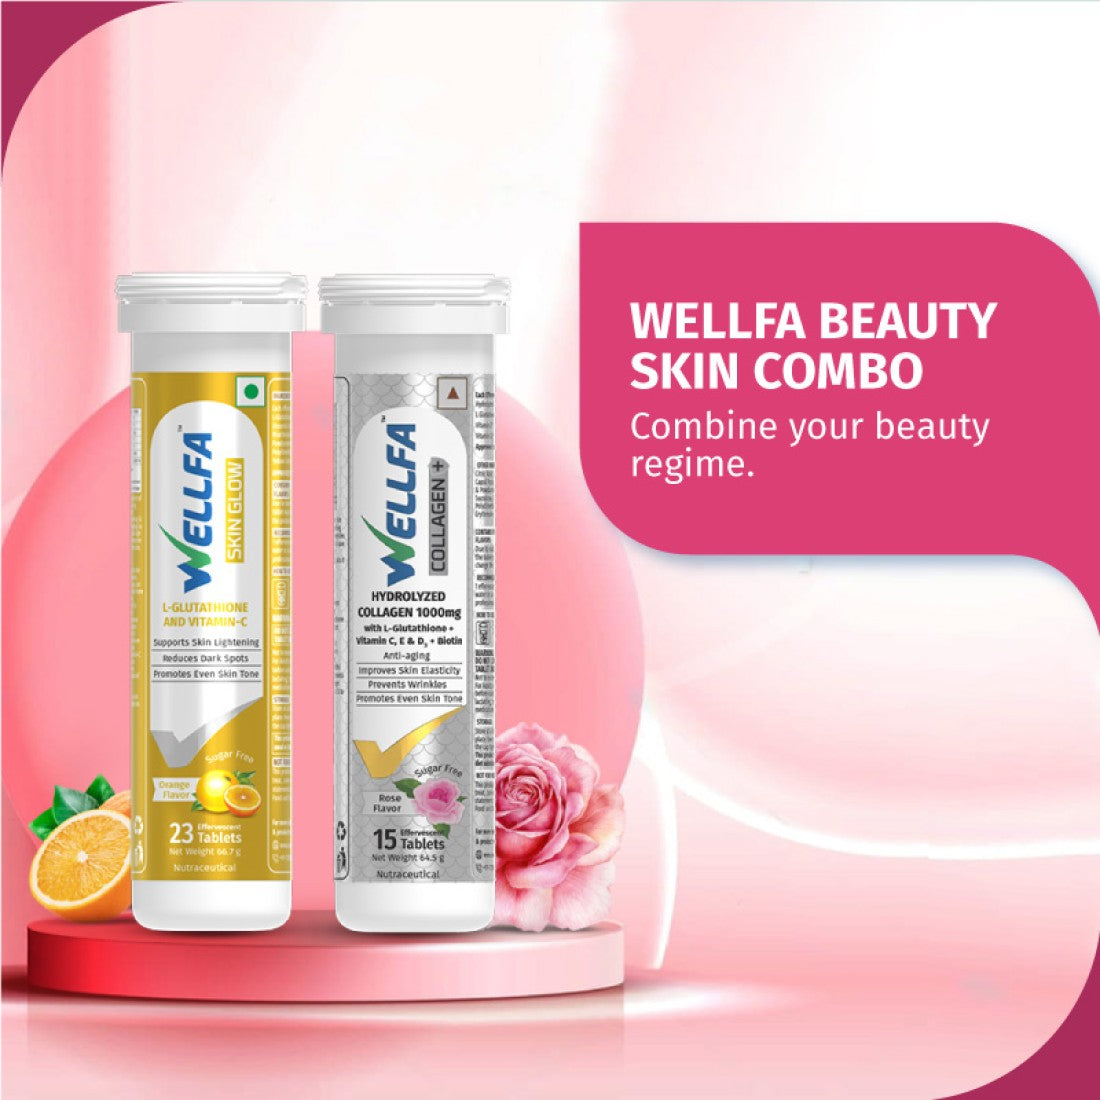 Wellfa Beauty Skin Combo, Combine your beauty regime.